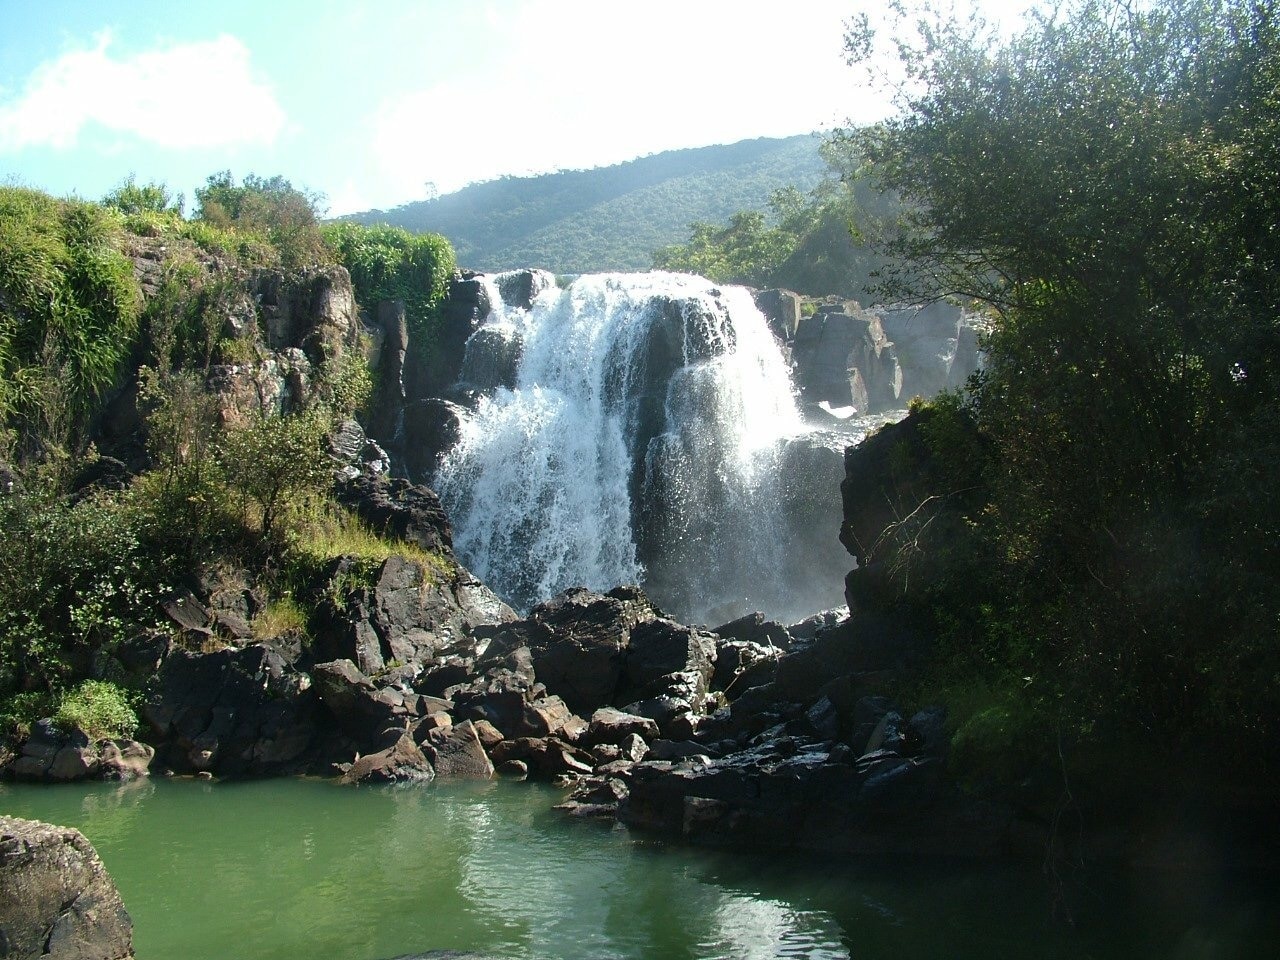 Véu das noivas waterfall